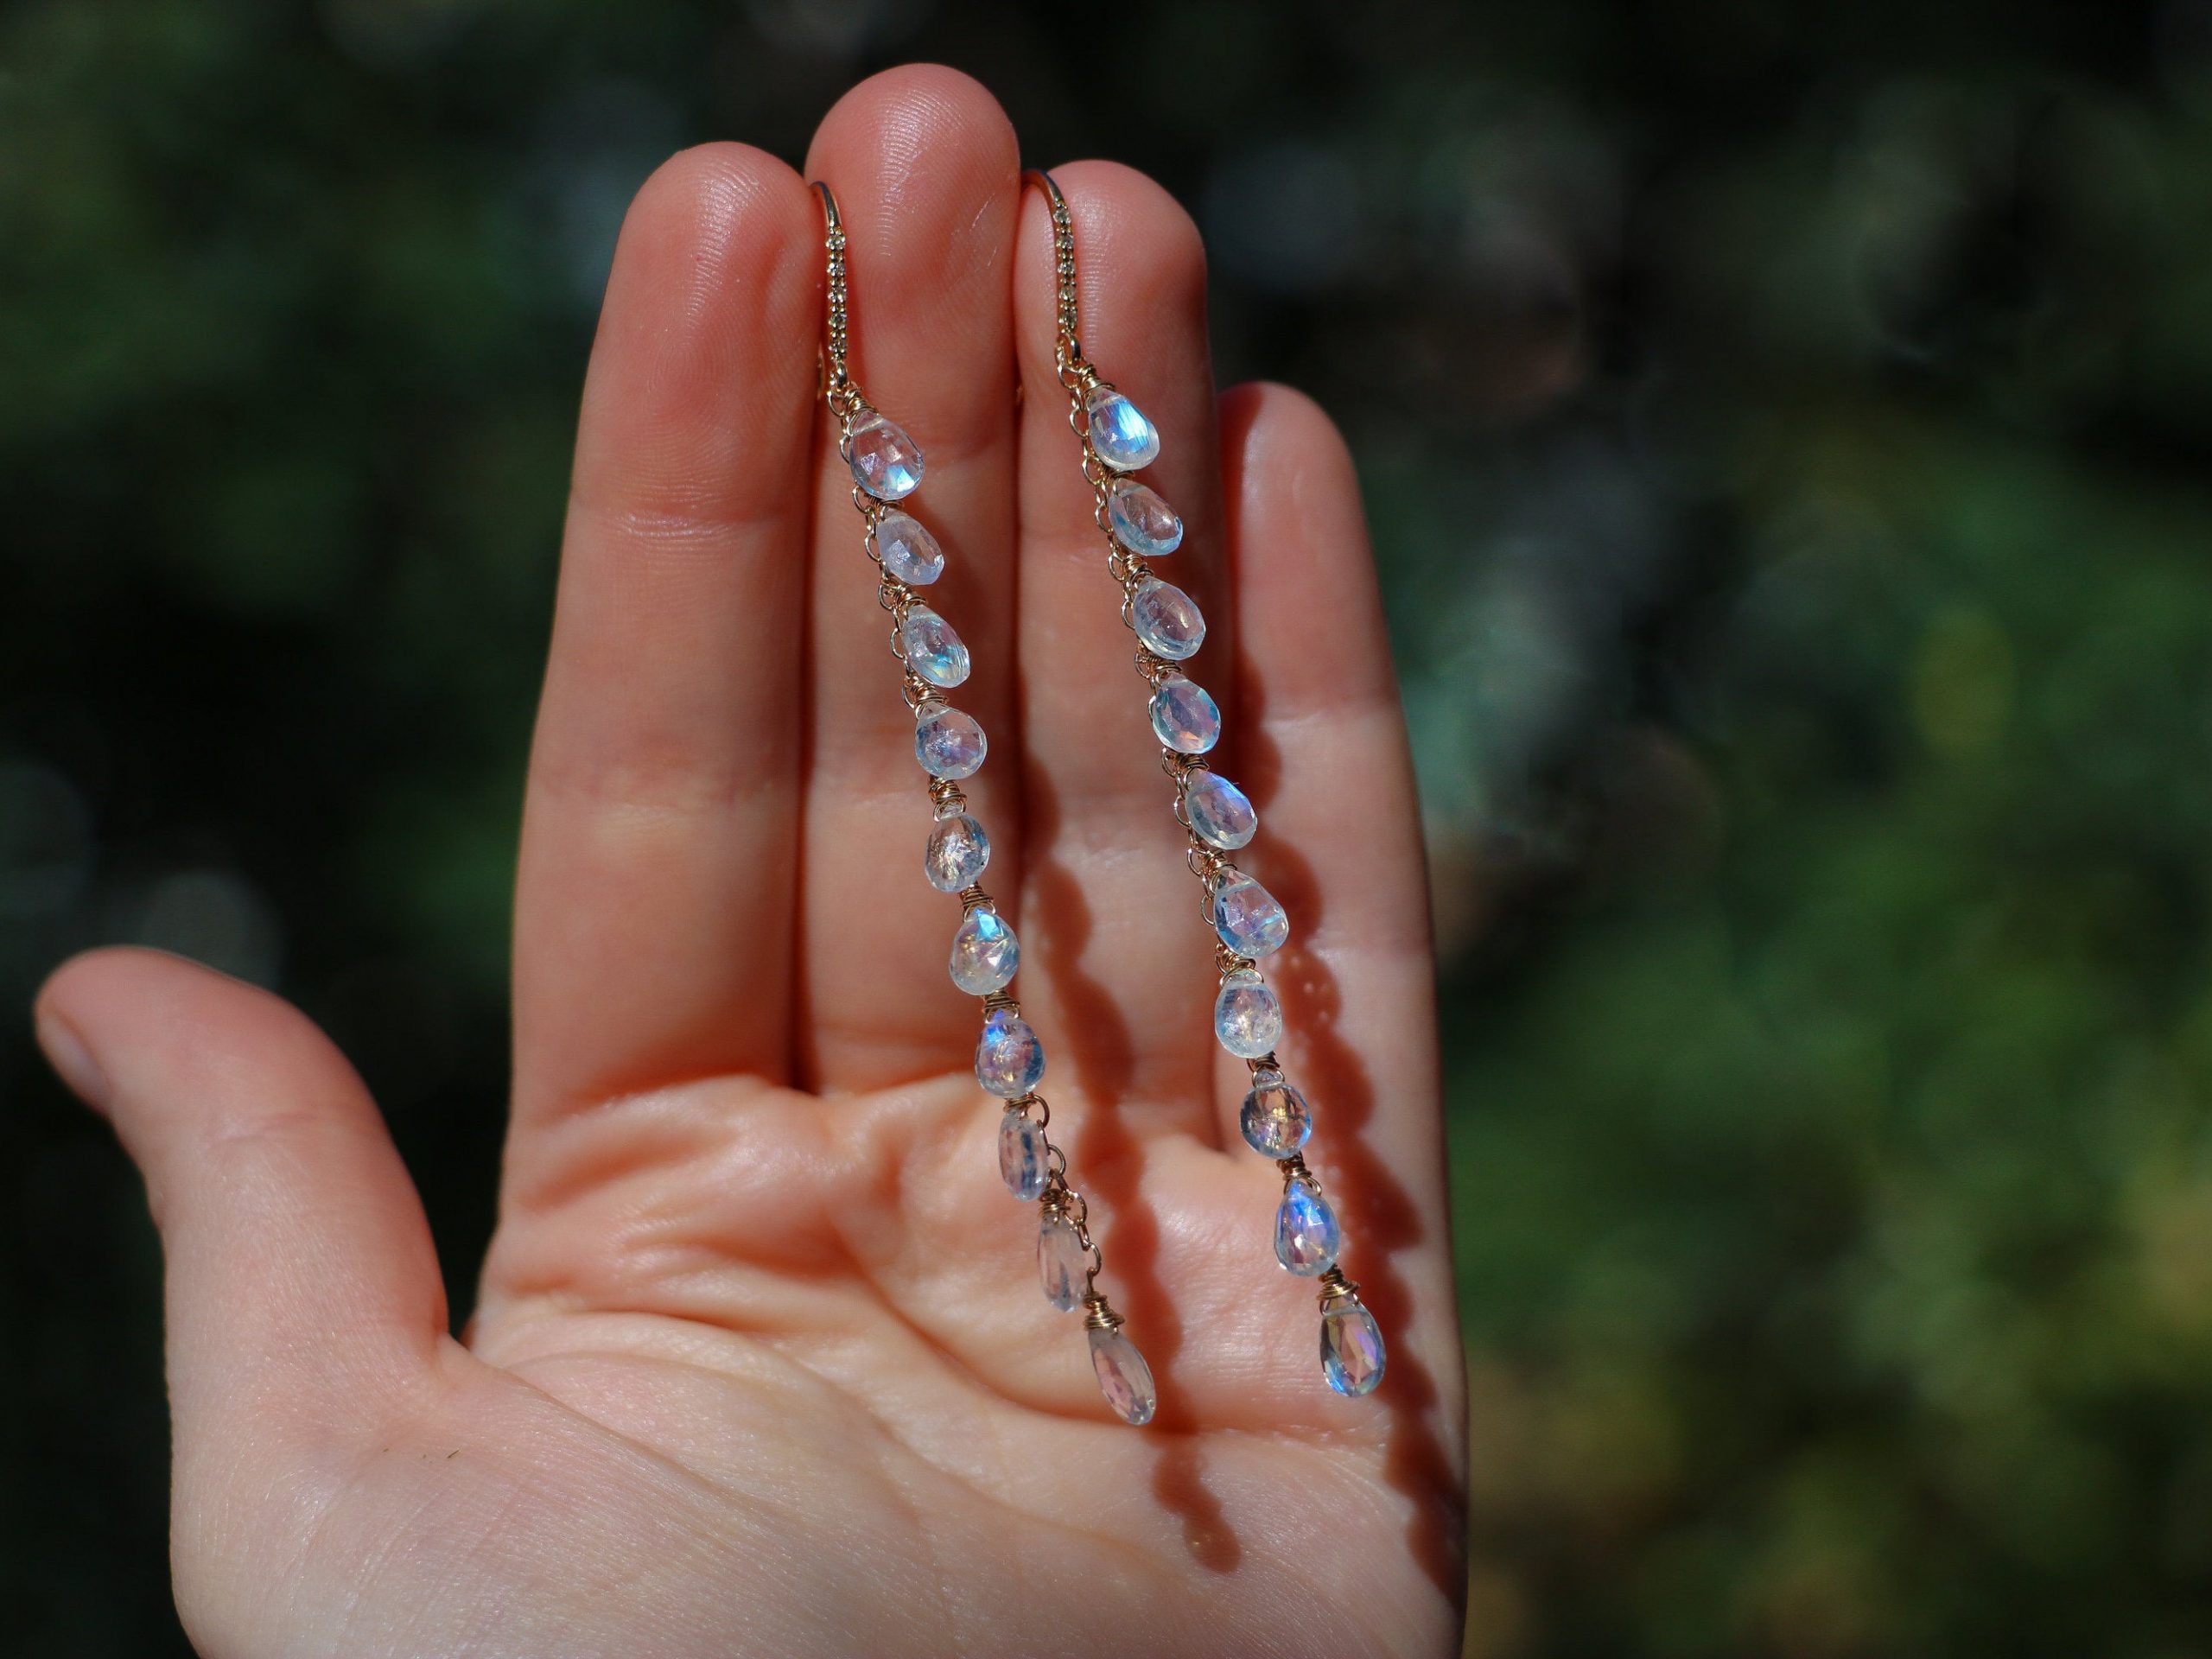 Solid Gold 14K Rainbow Moonstone Earrings with Genuine Diamonds